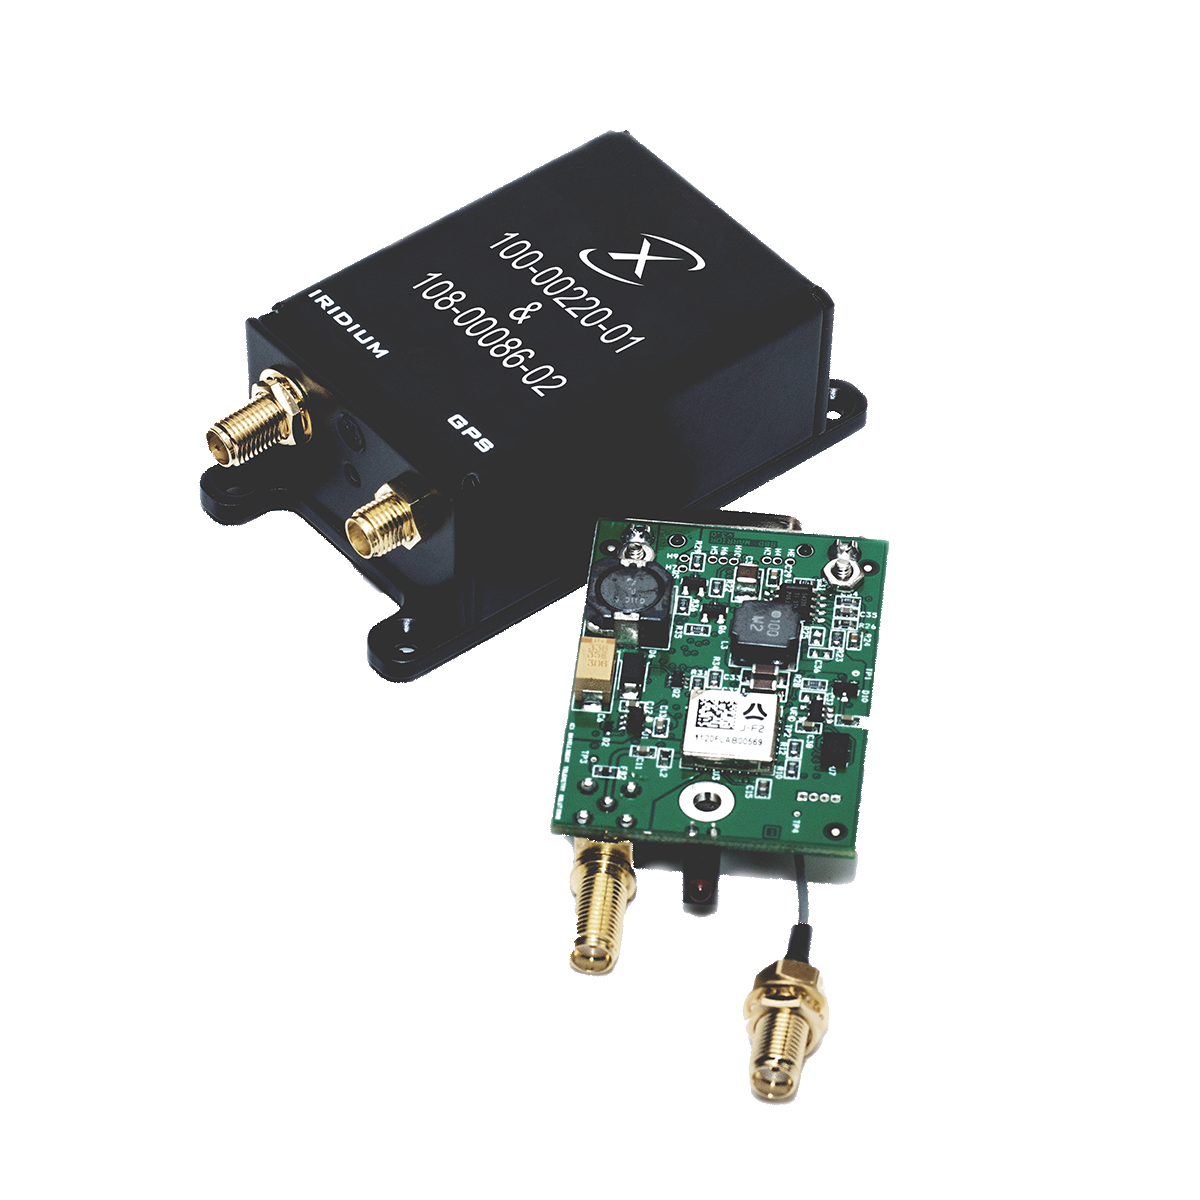 IRIDIUM 9603 based SBD Controller/ daughter board with GPS 